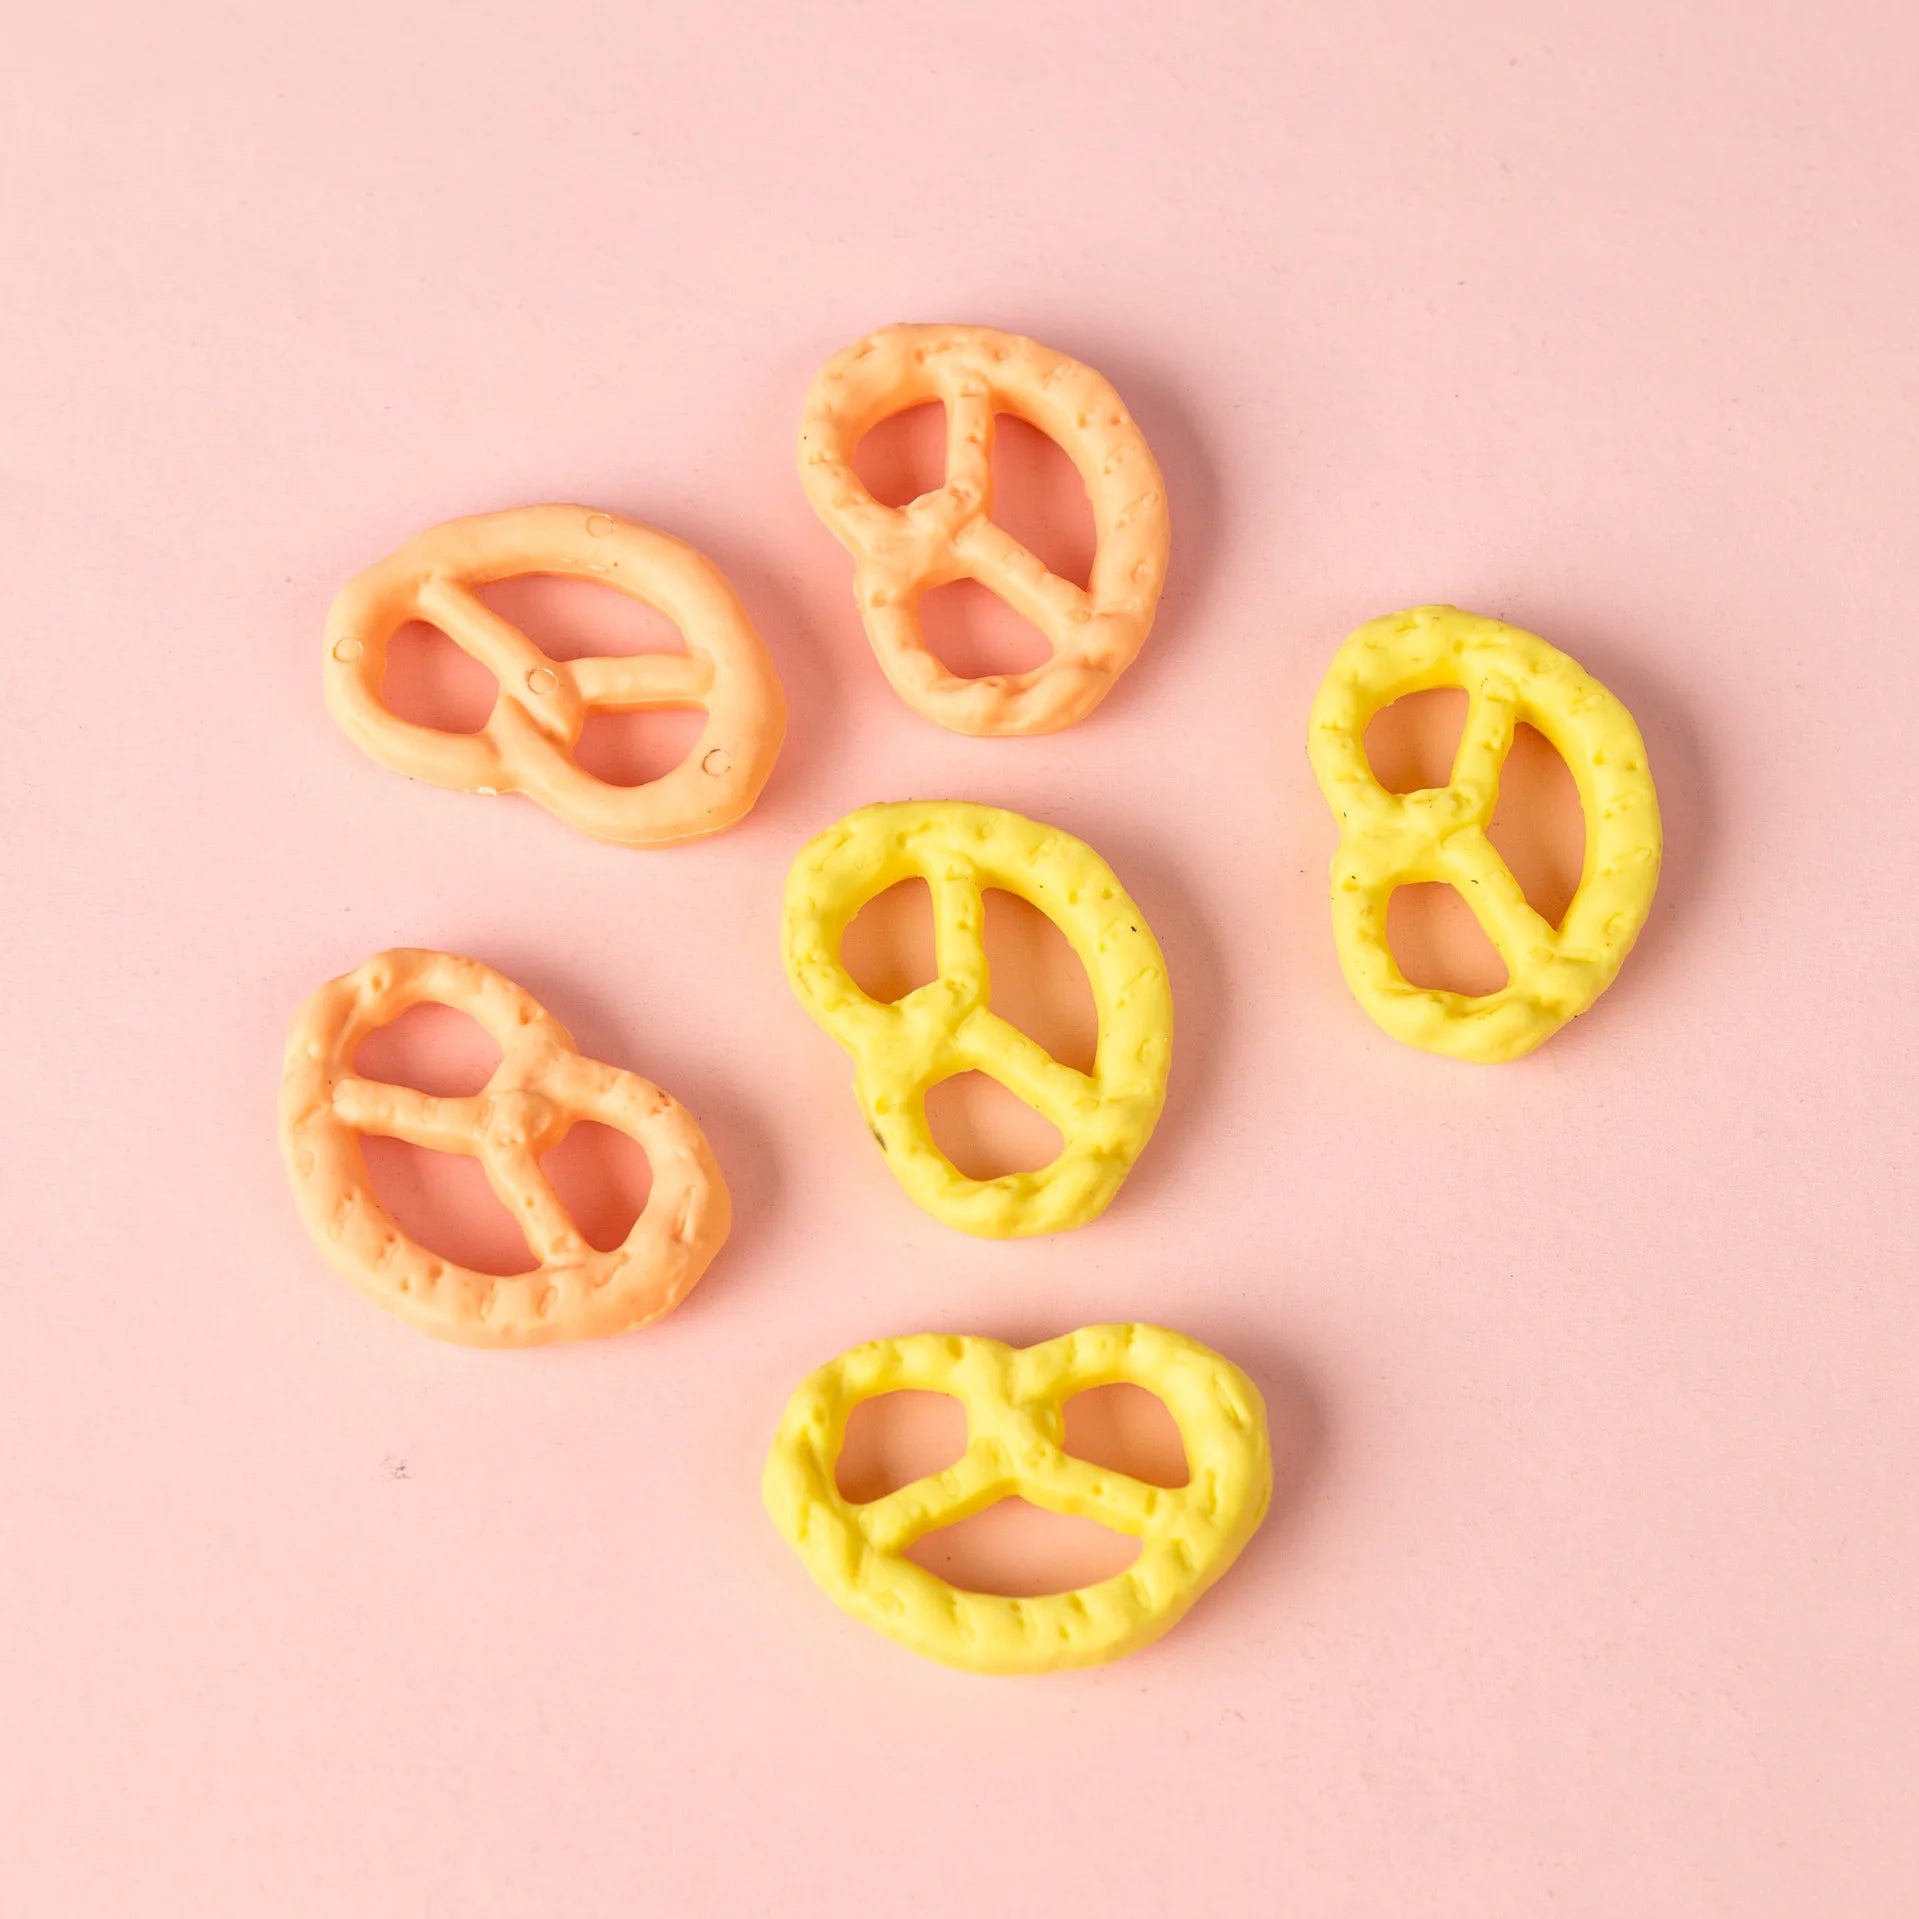 Biscuits Erasers